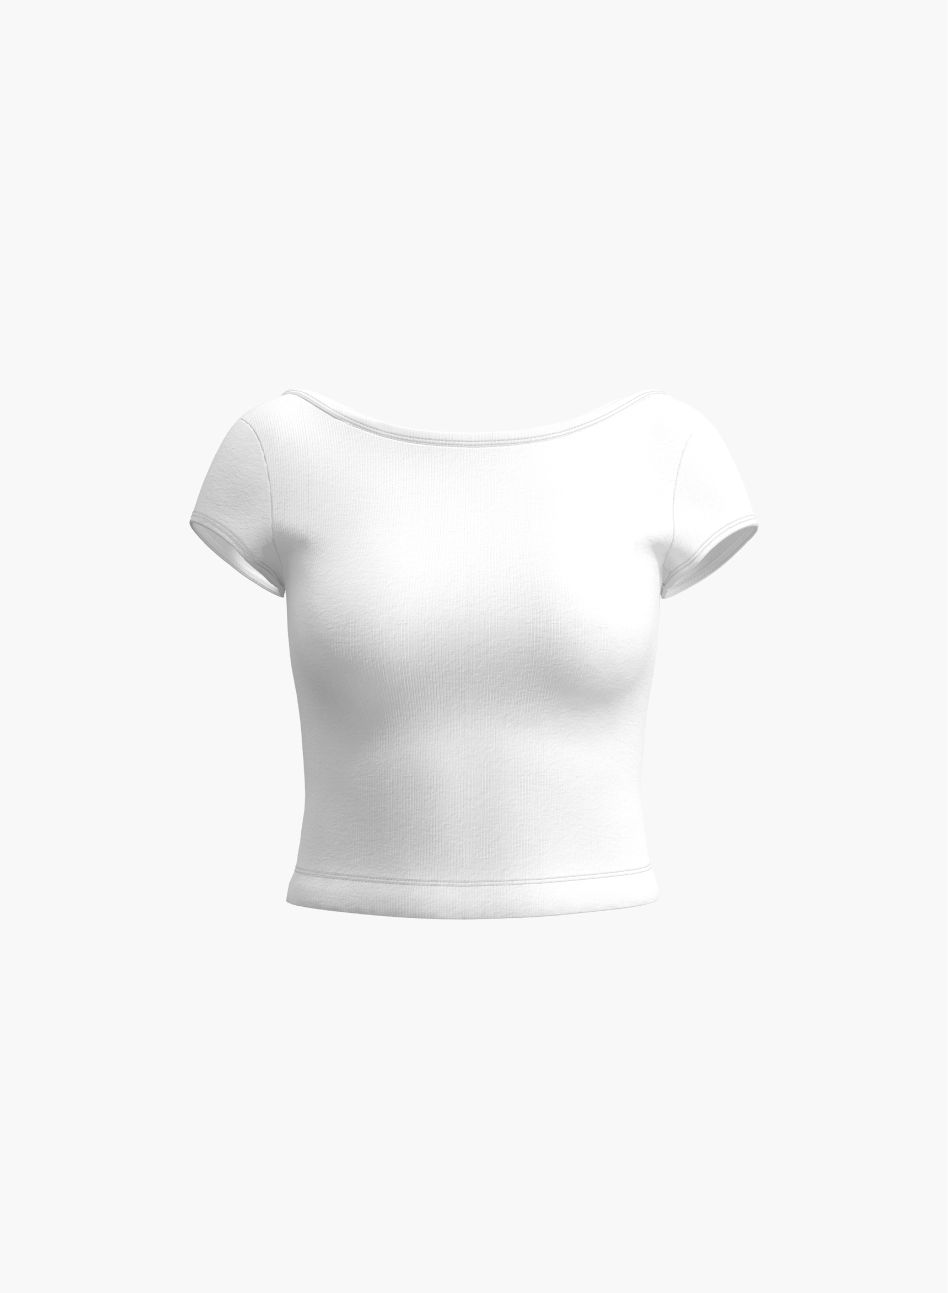 A white cropped t-shirt.